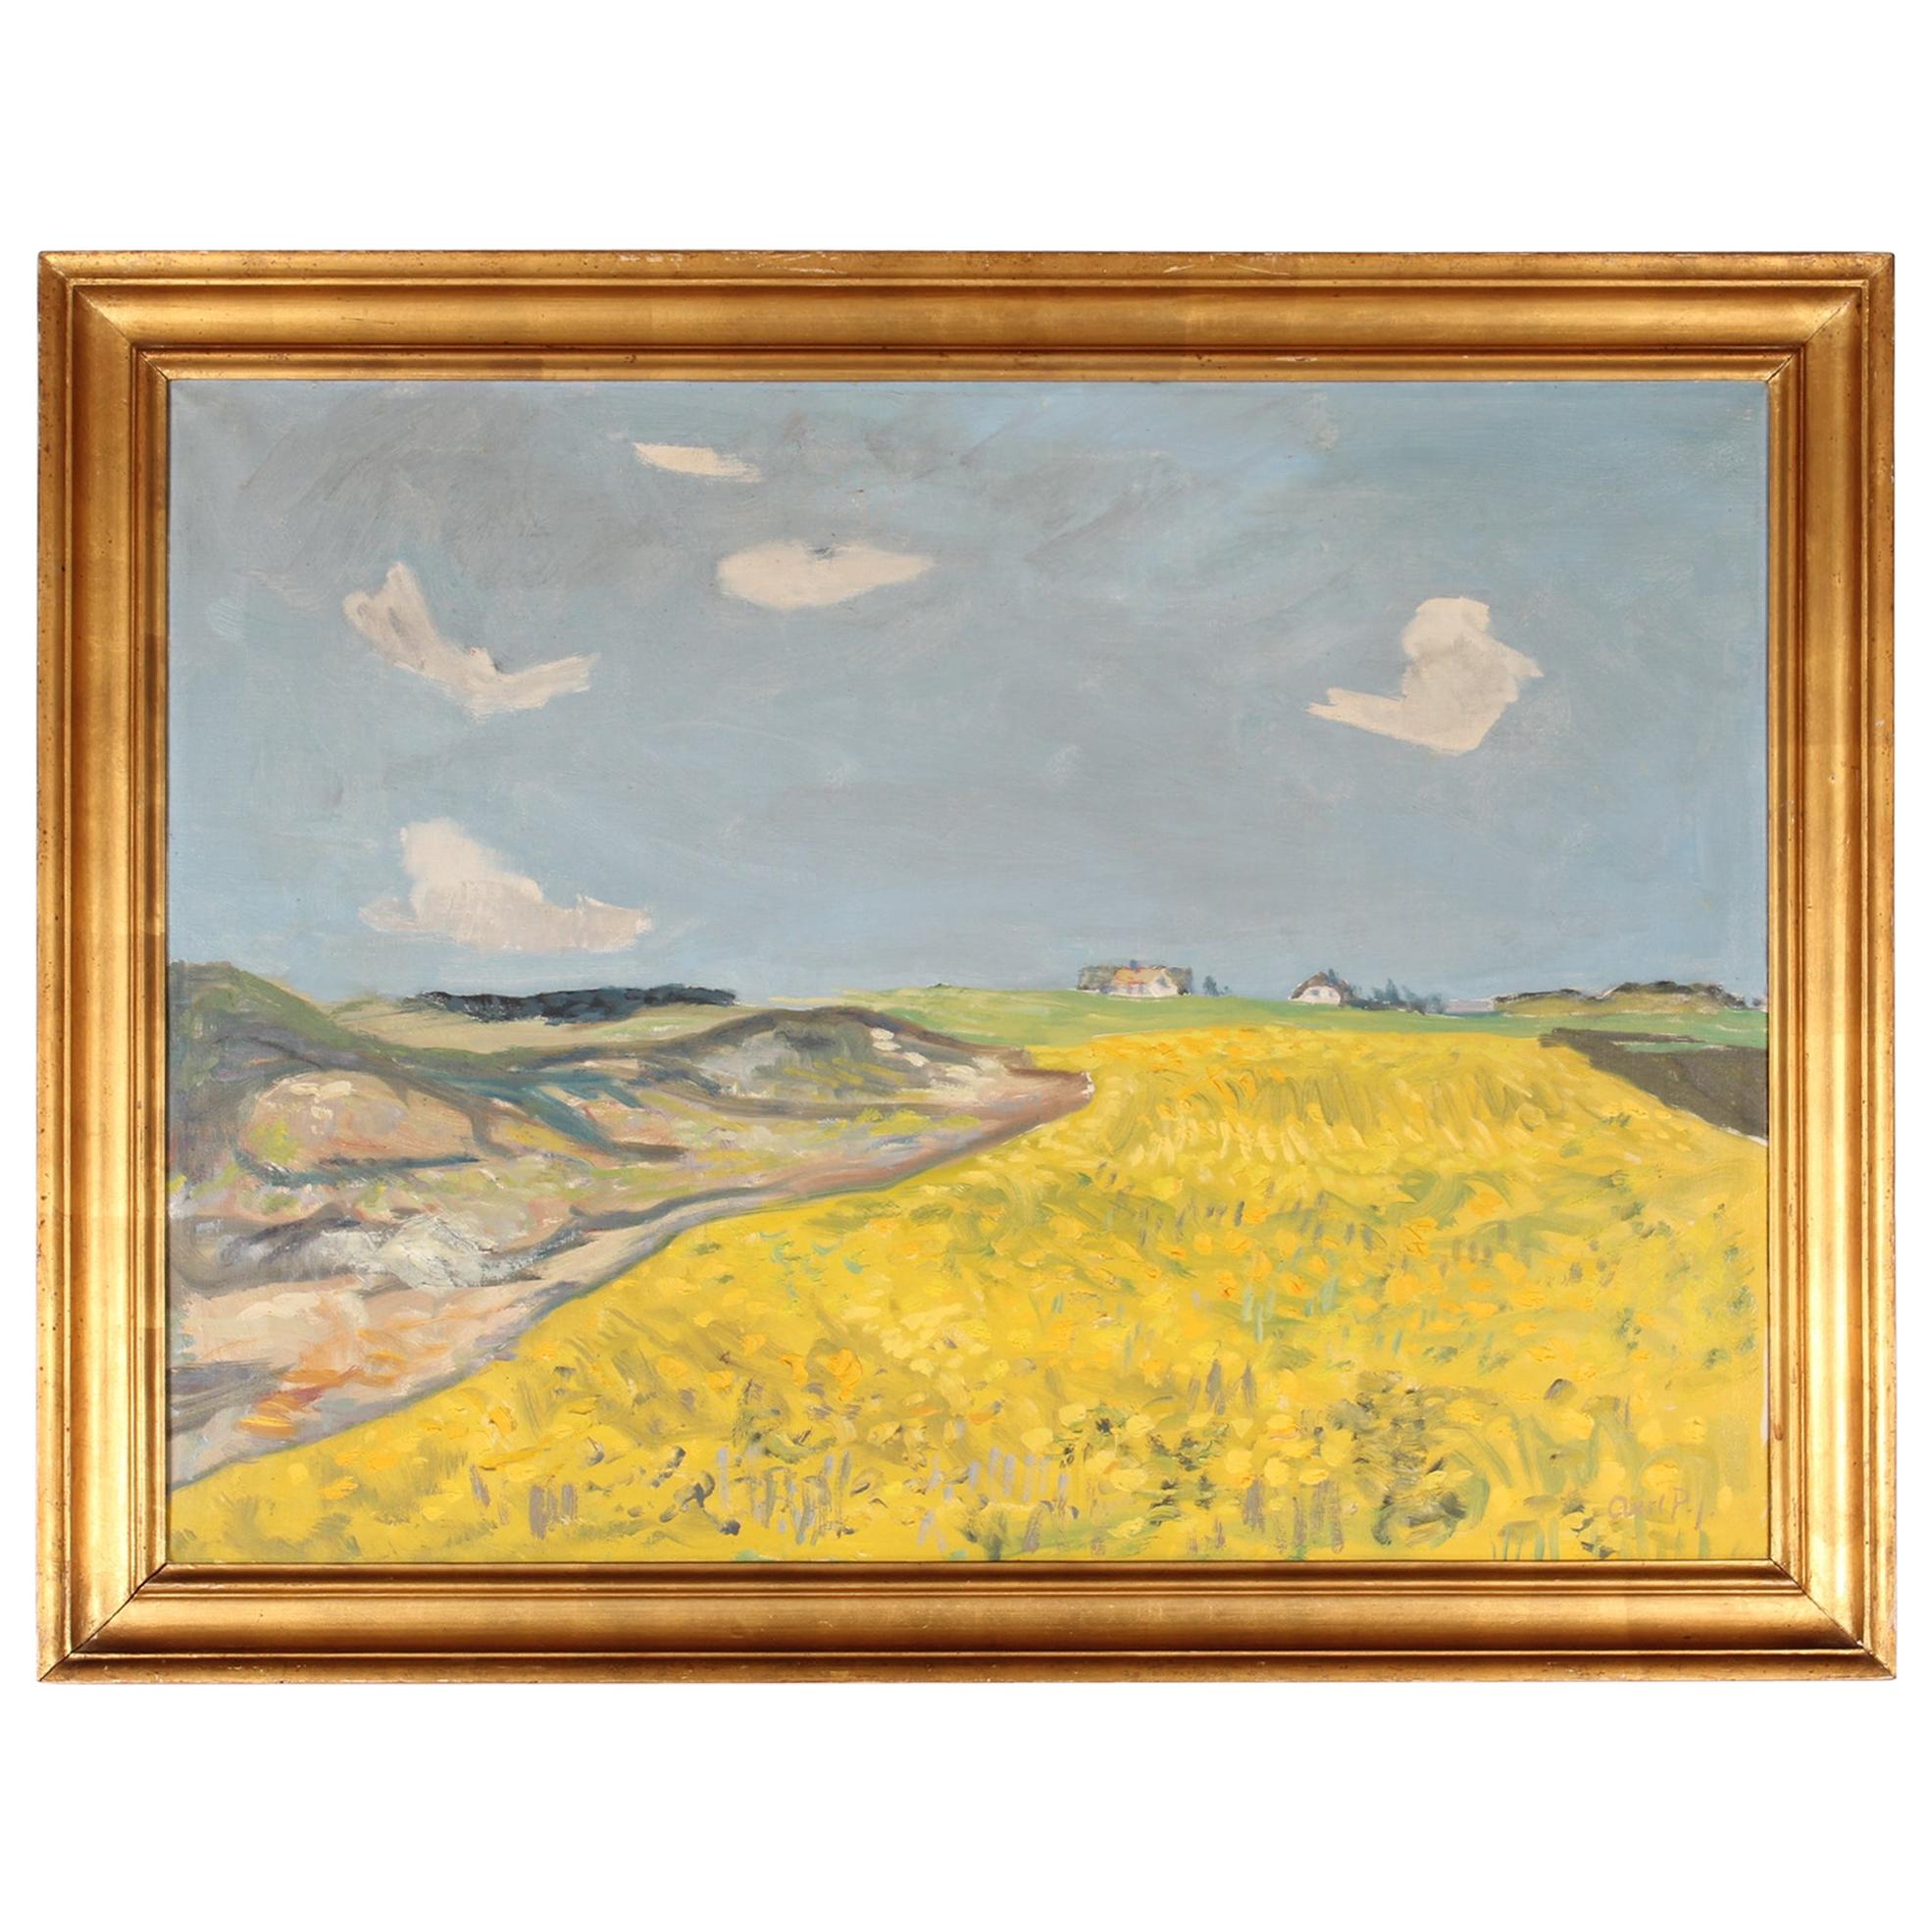 Danish Artist Axel P. Jensen Painting Landscape in Denmark Oil on Canvas, 1940s